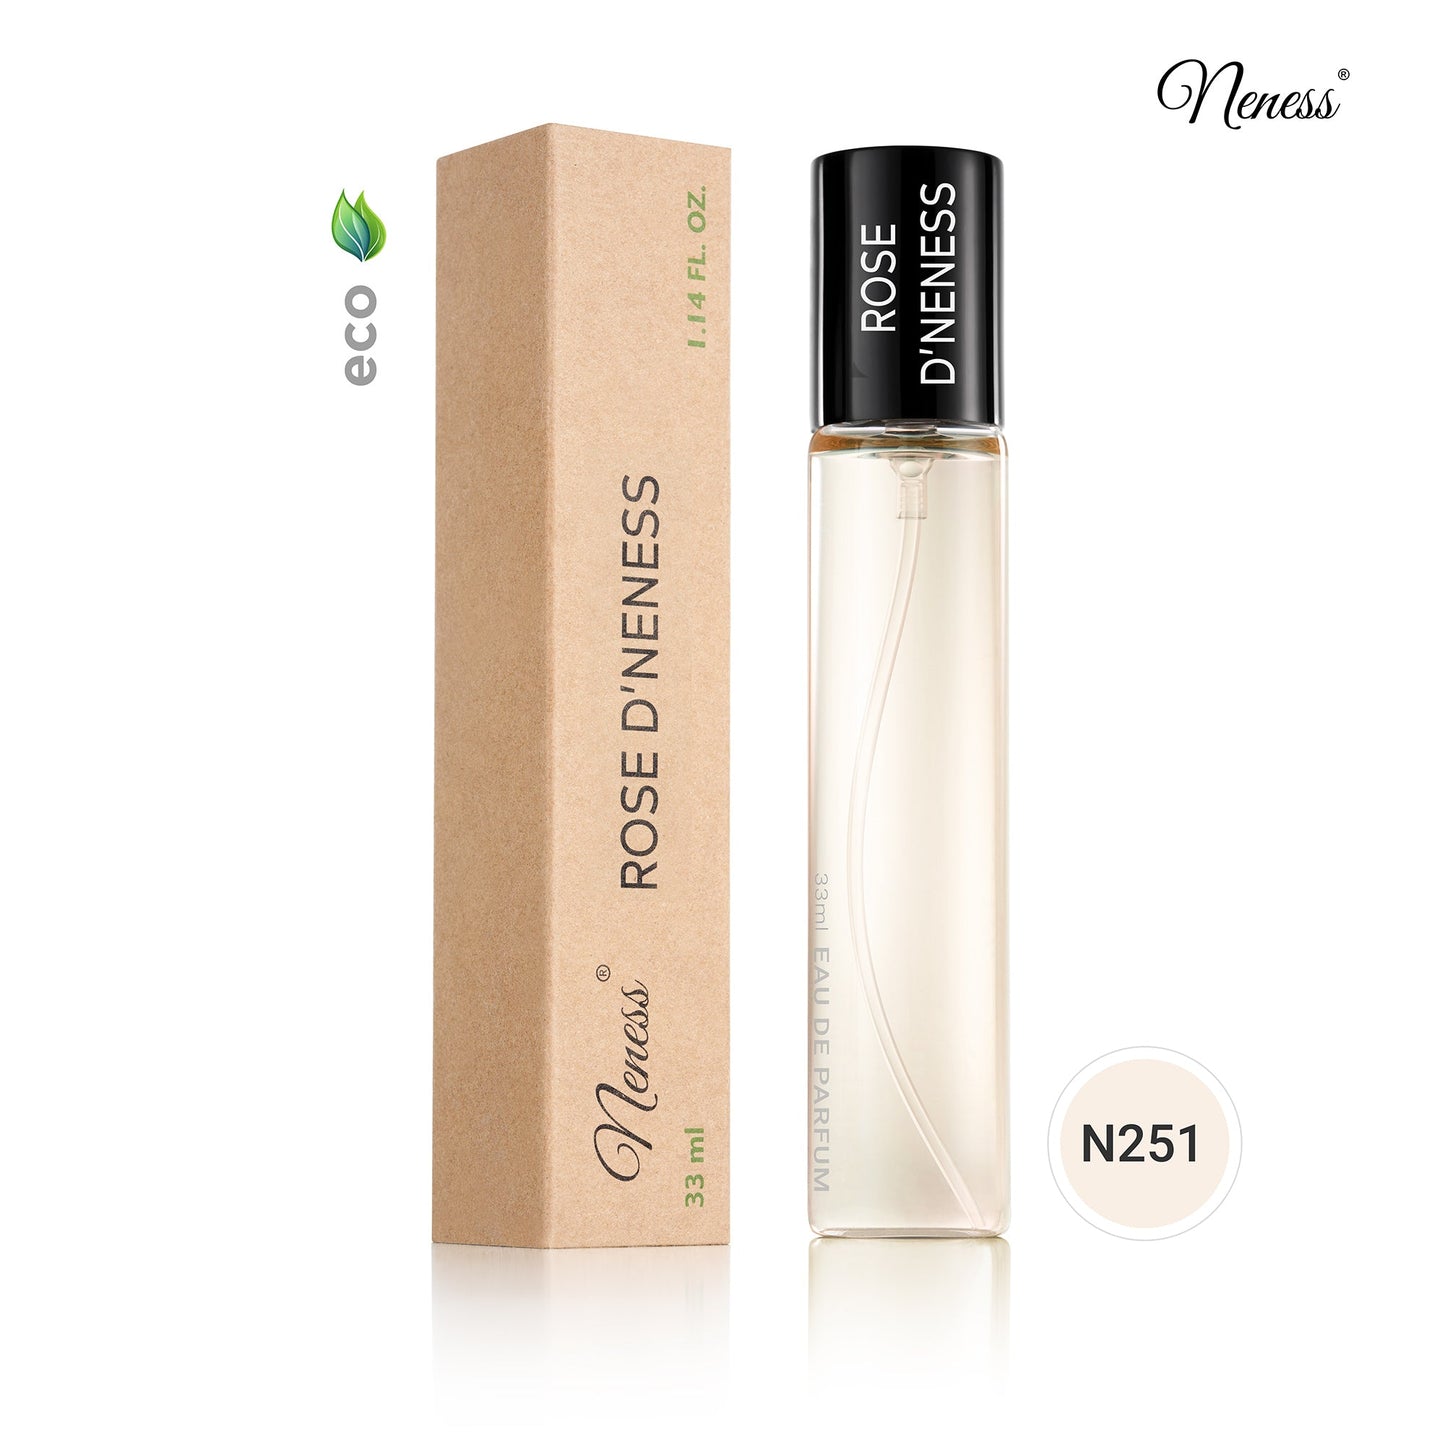 N251. Neness Rose D'Neness - 33 ml - Parfums unisexes